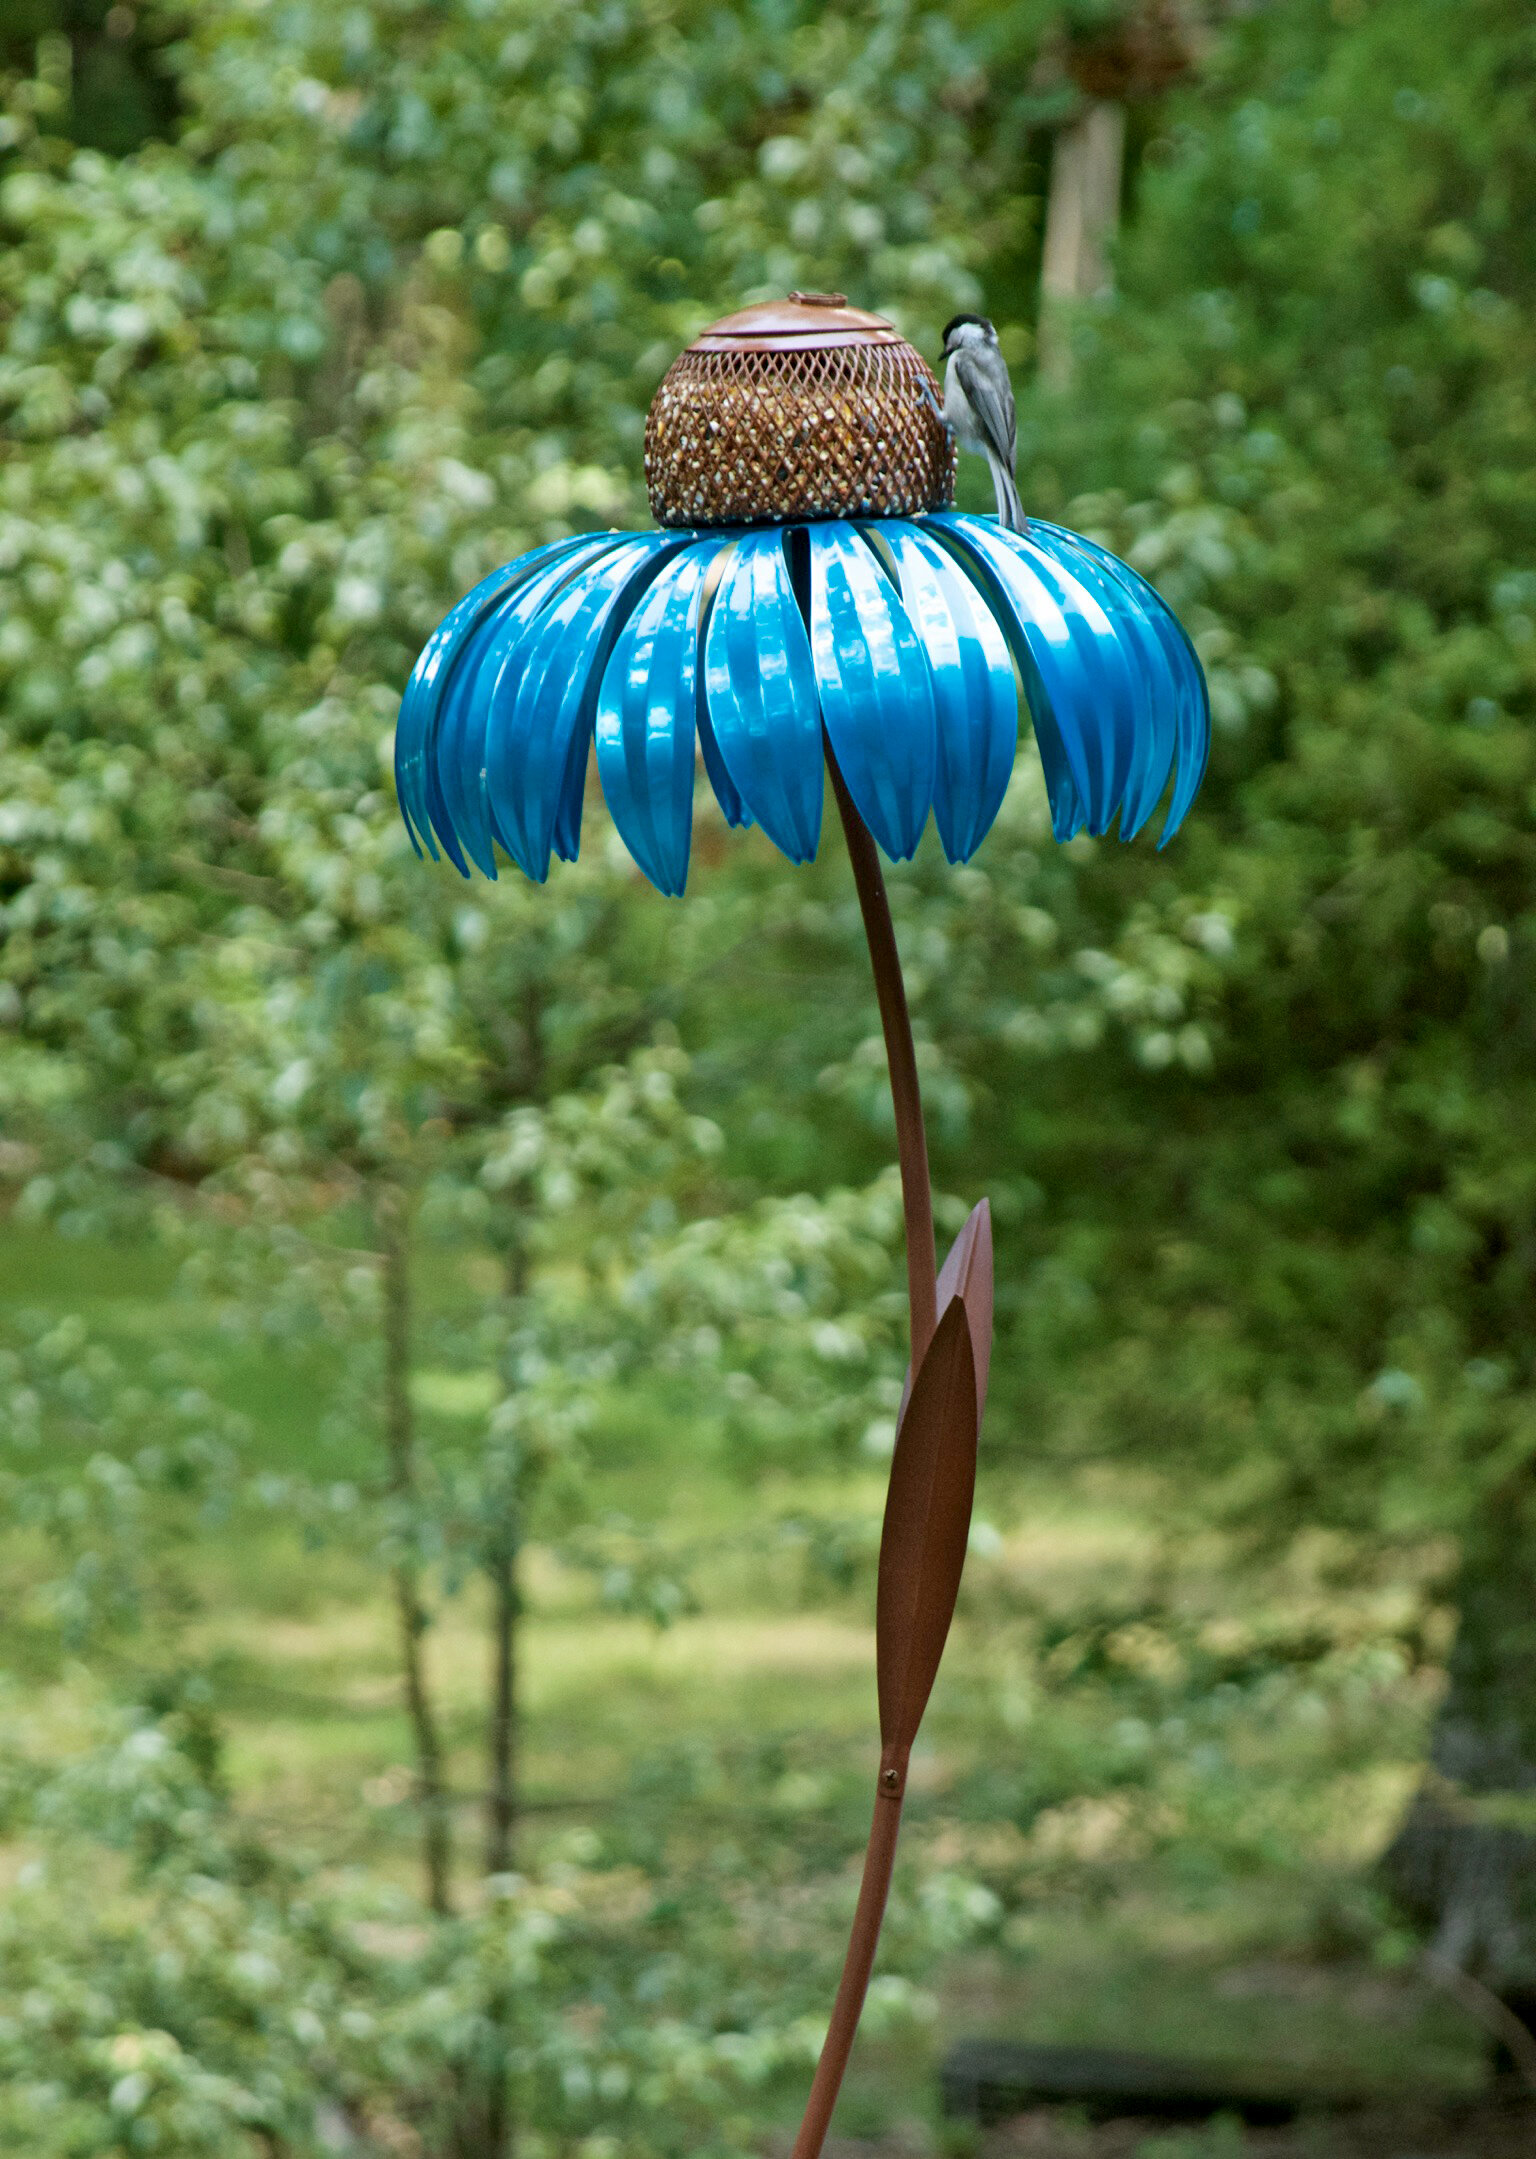 Coneflower Standing Bird Feeder Outside Rust Resistant Garden Art Sensation HOT 